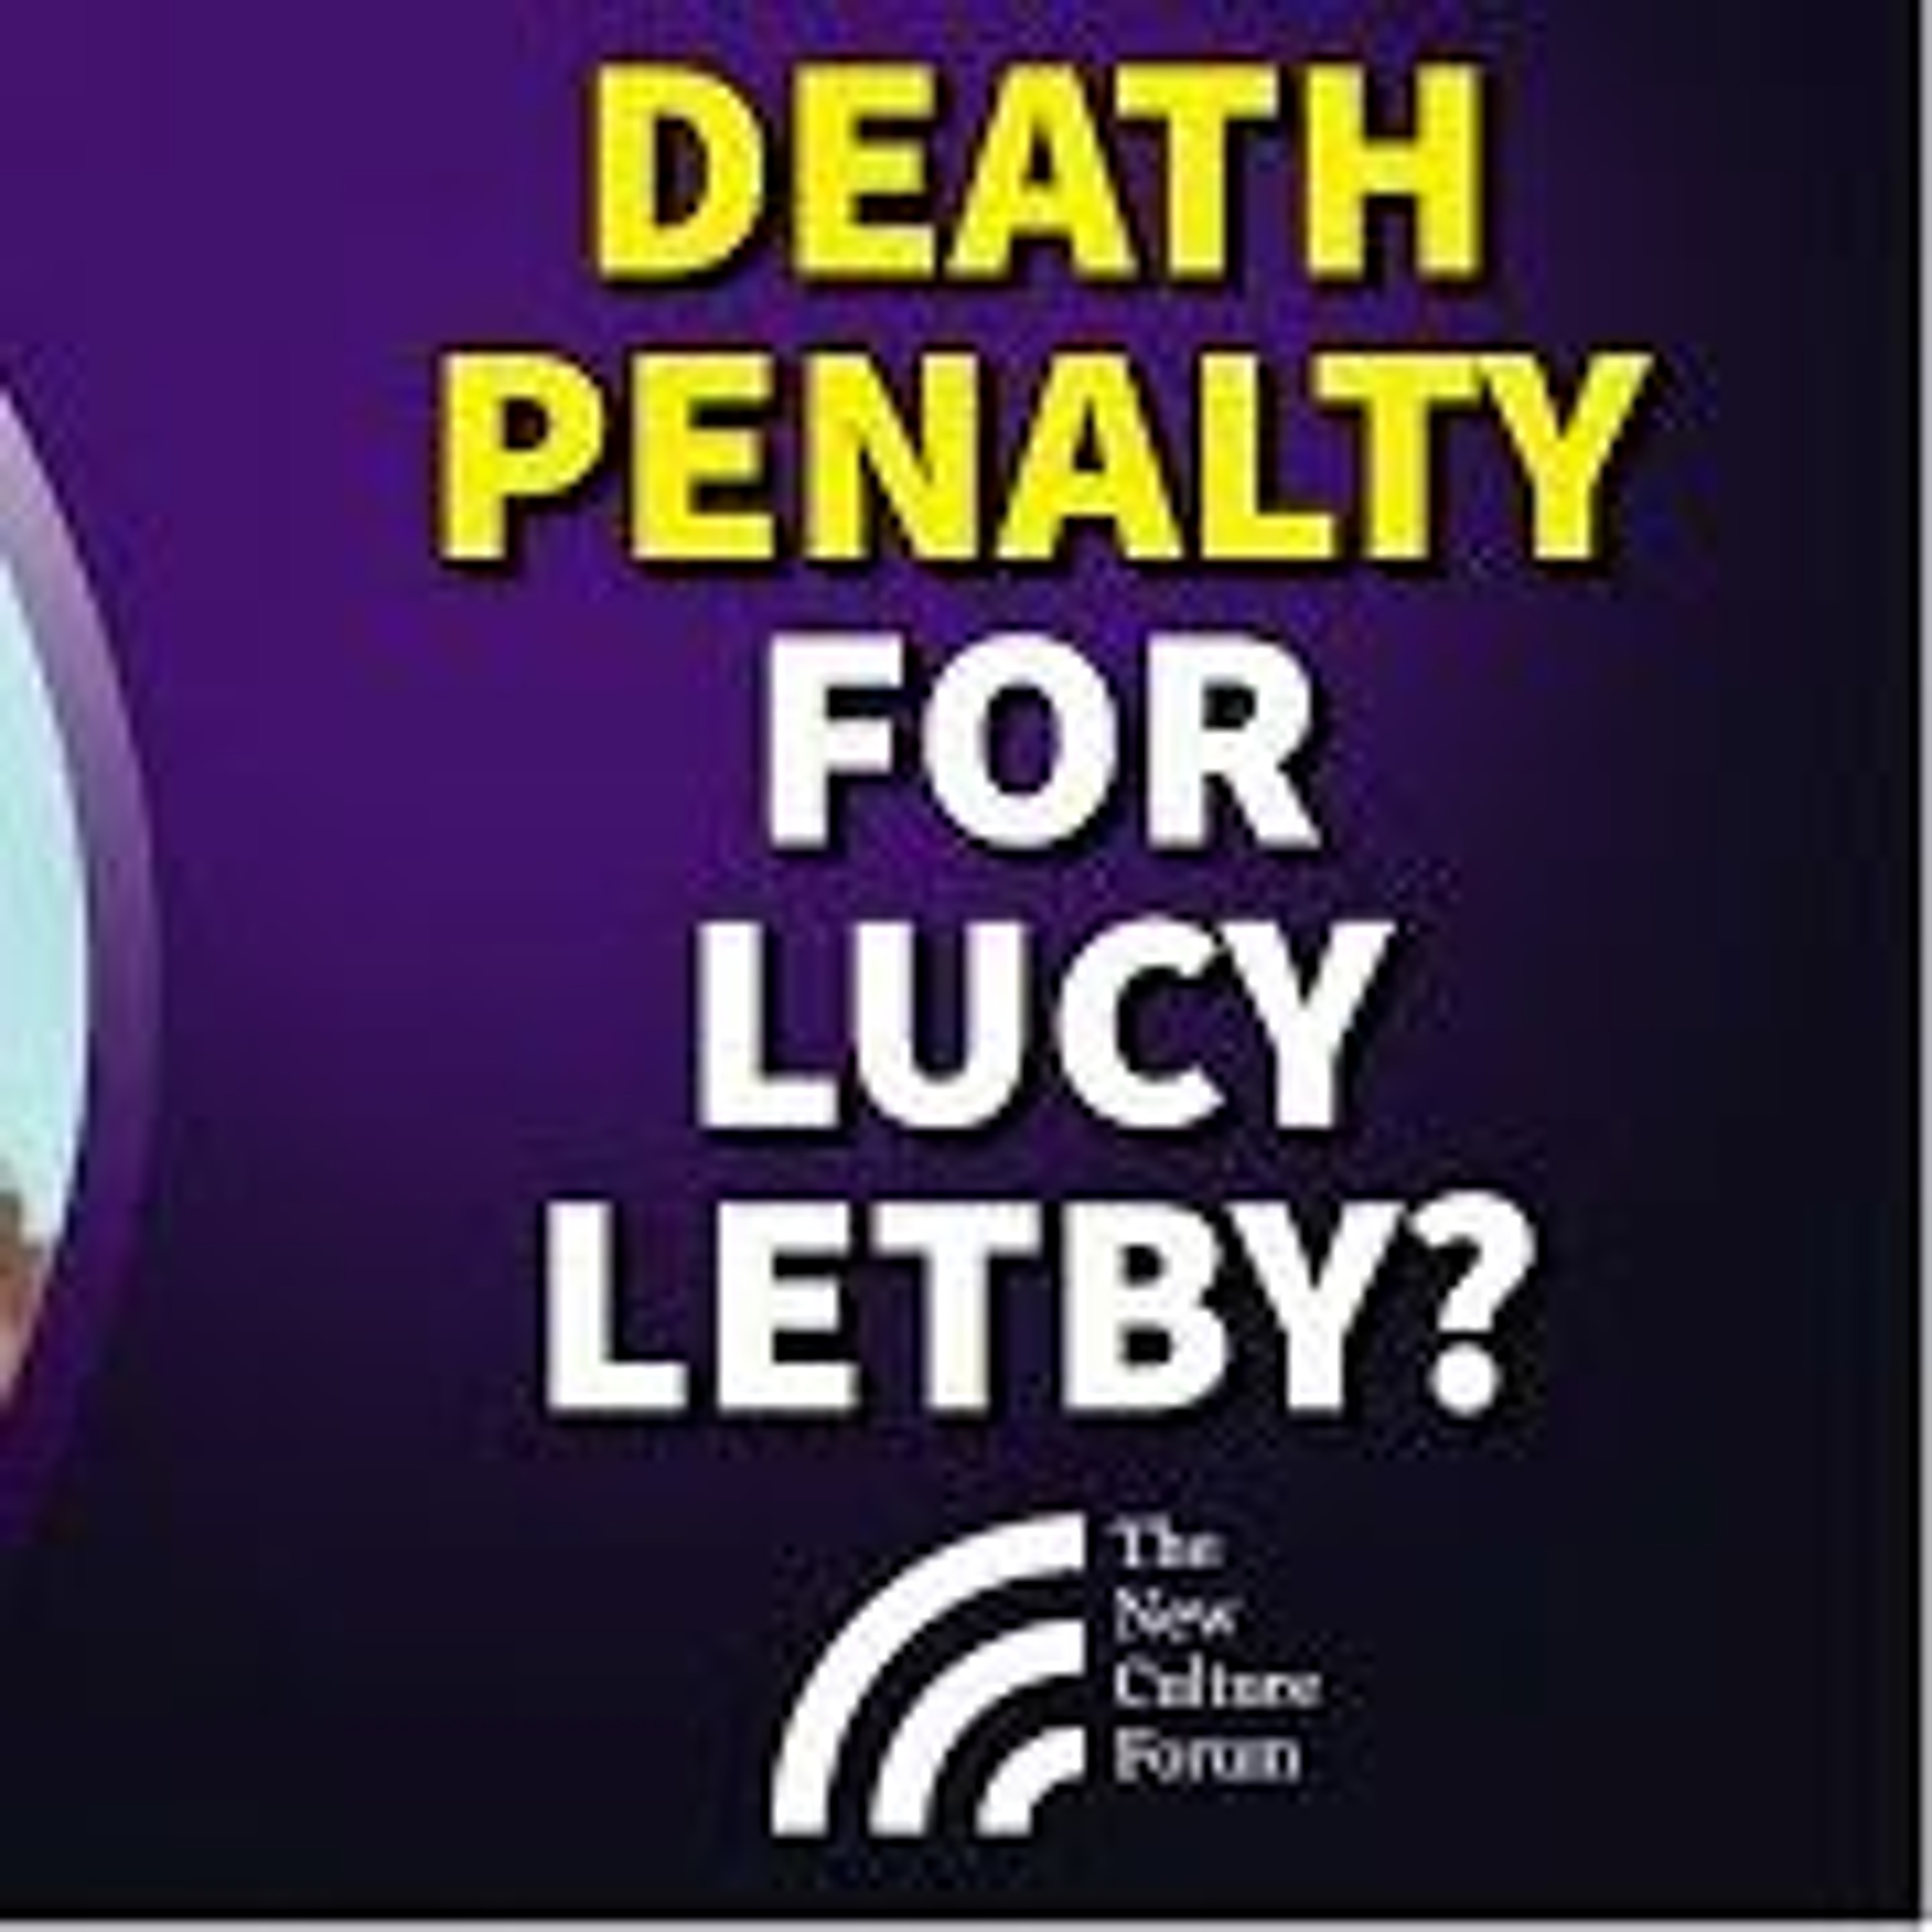 Sadiq Khan's Anti-White Agenda. Should UK Restore Death Penalty / Capital Punishment?